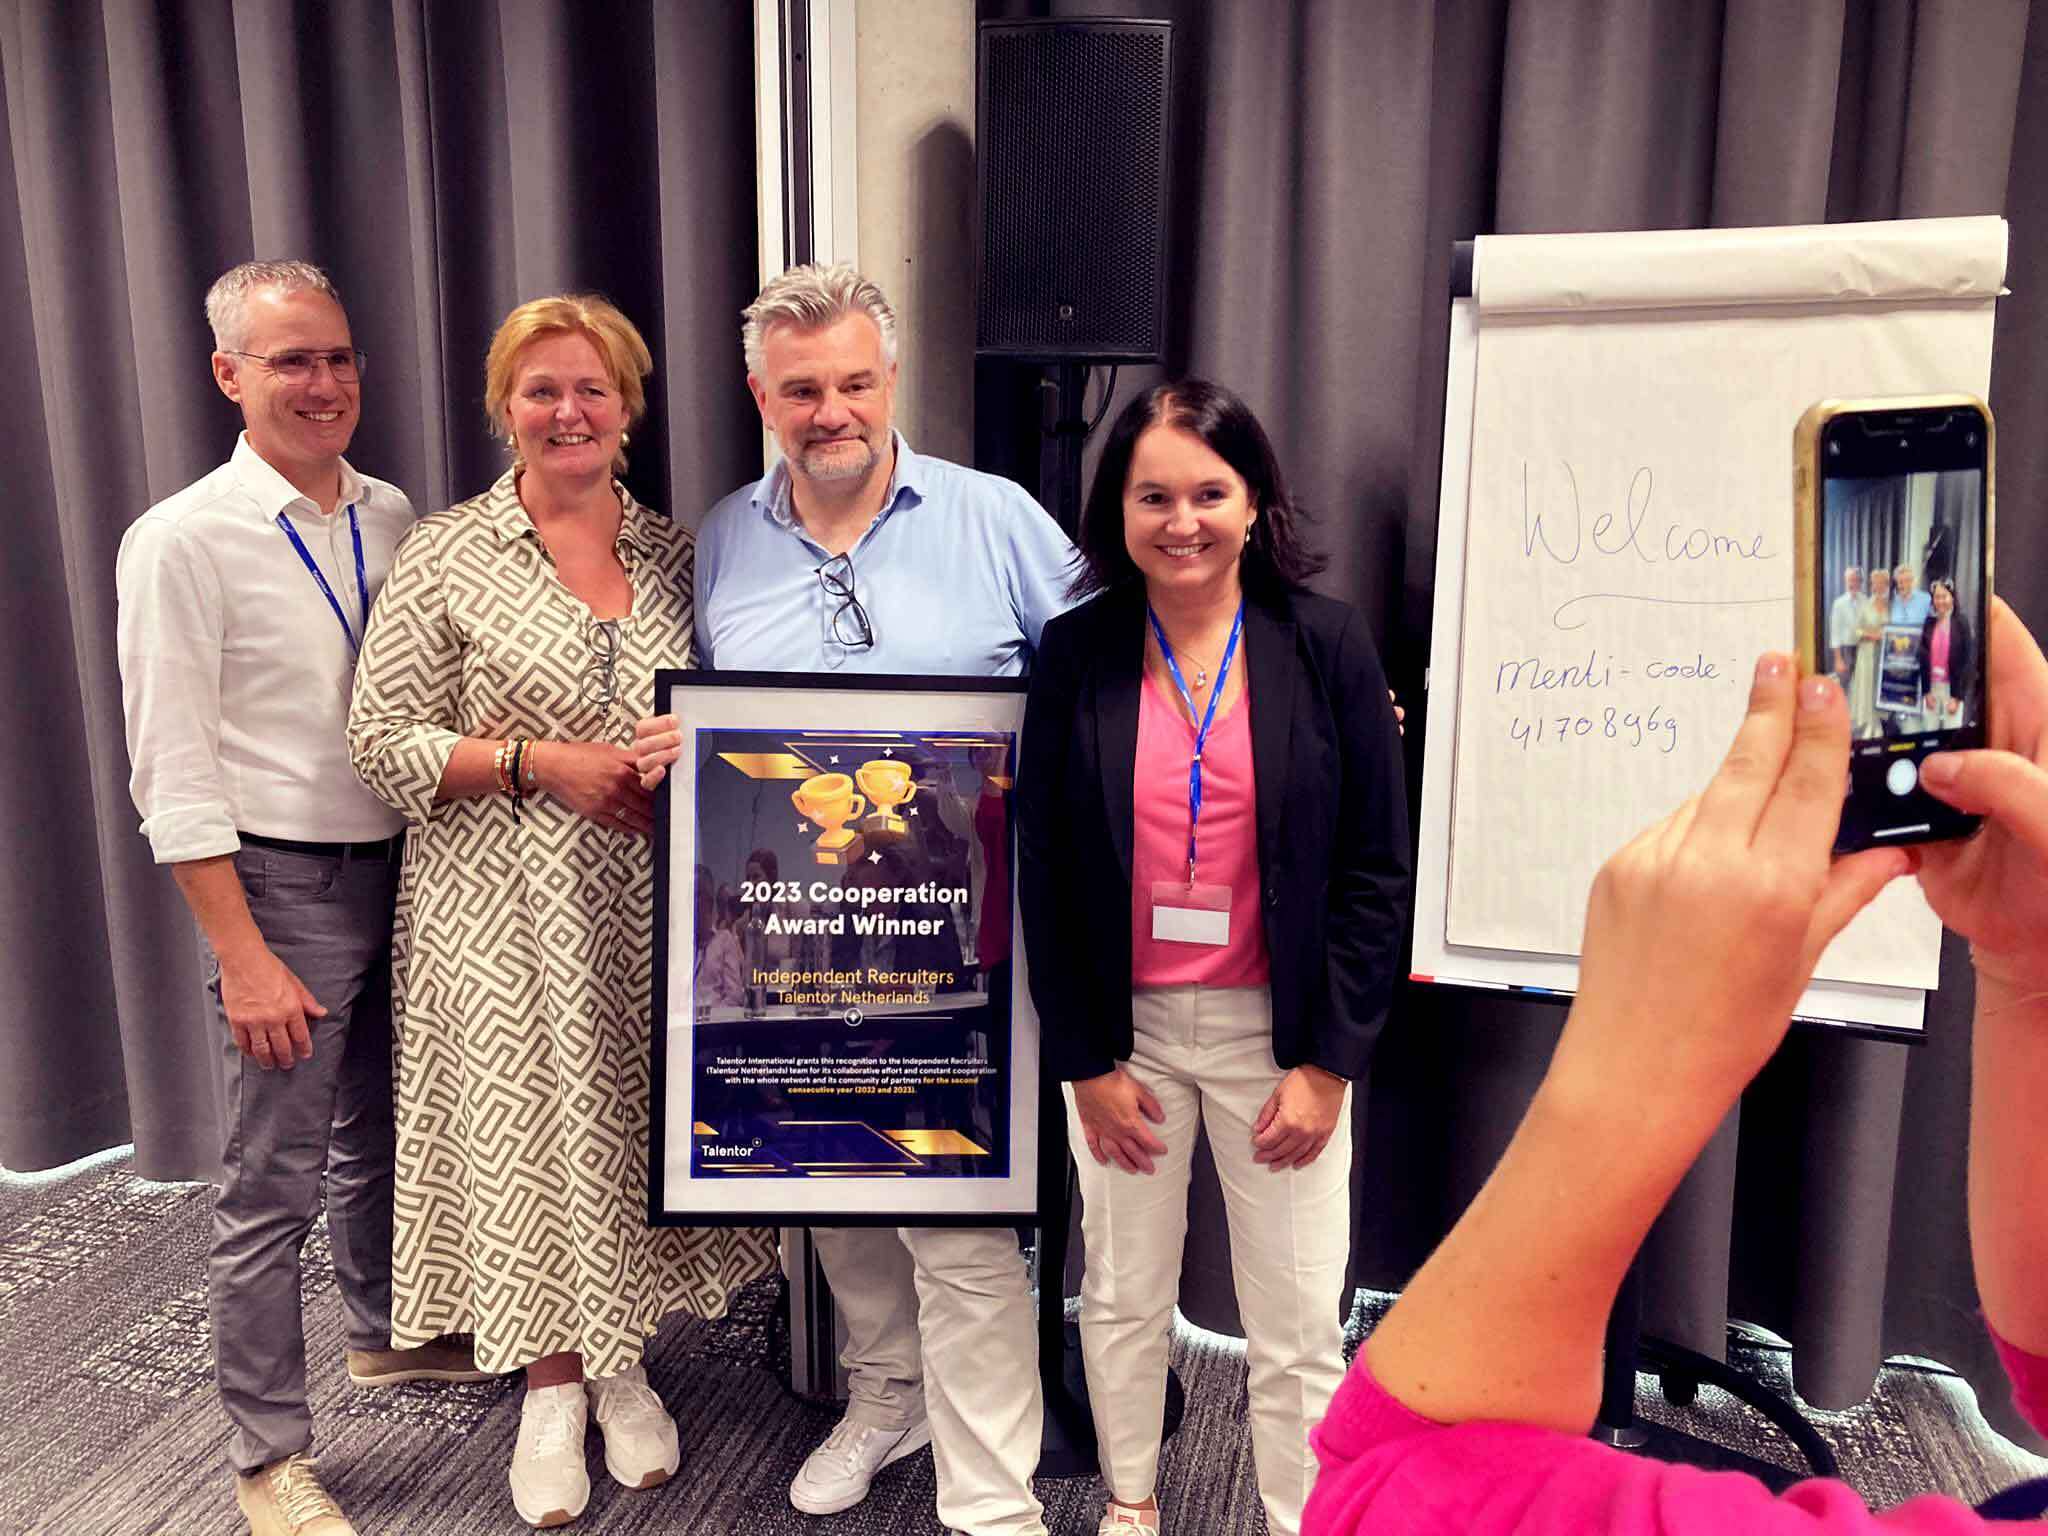 Talentor Summit Amsterdam 2023 Cooperation Award Winner Netherlands